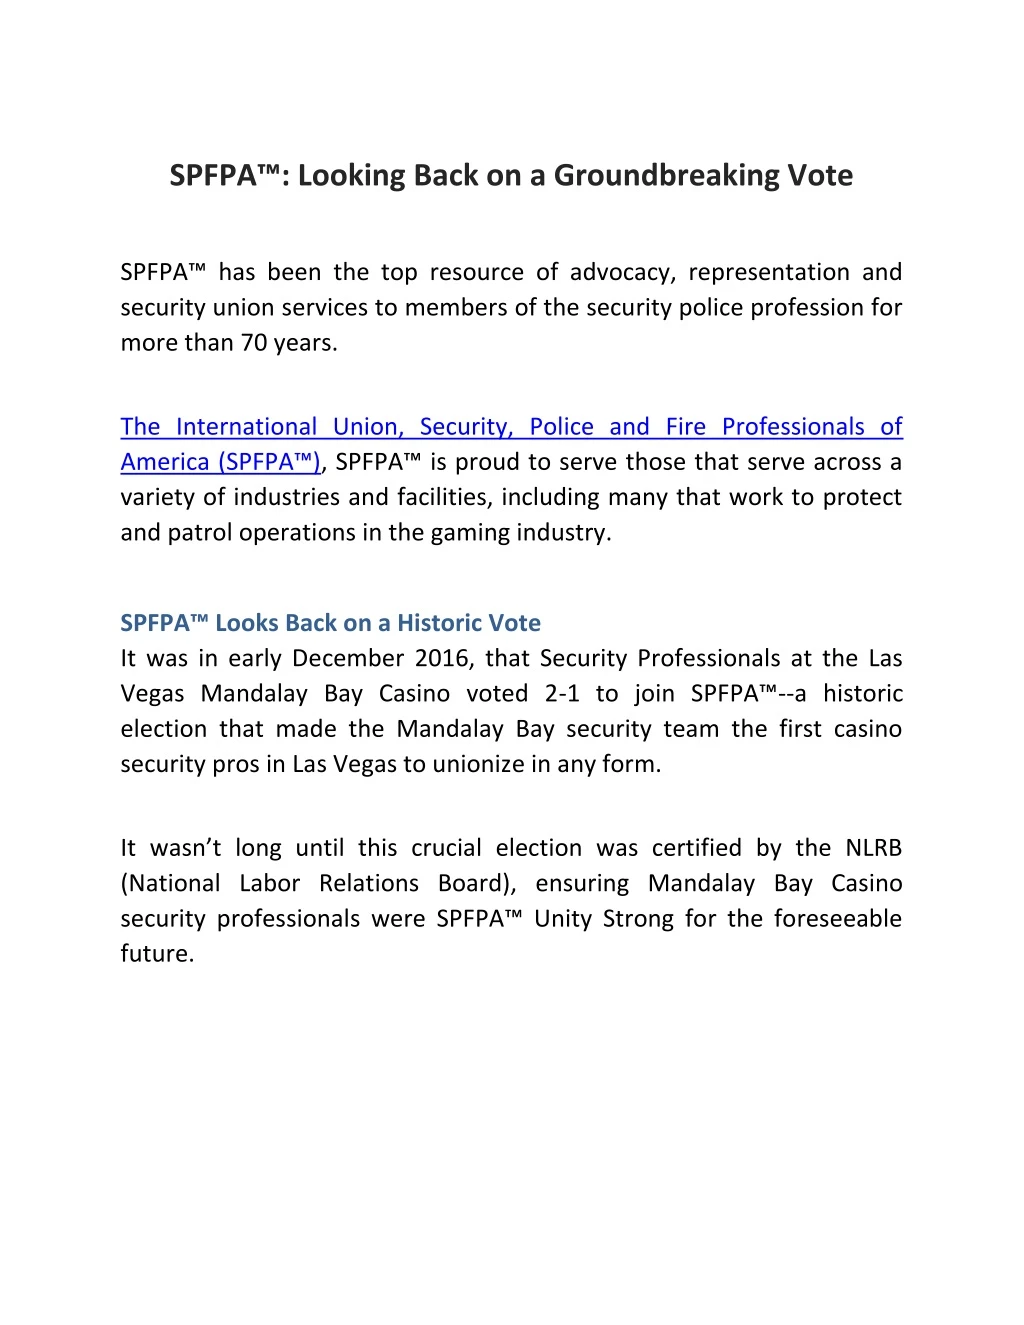 spfpa looking back on a groundbreaking vote